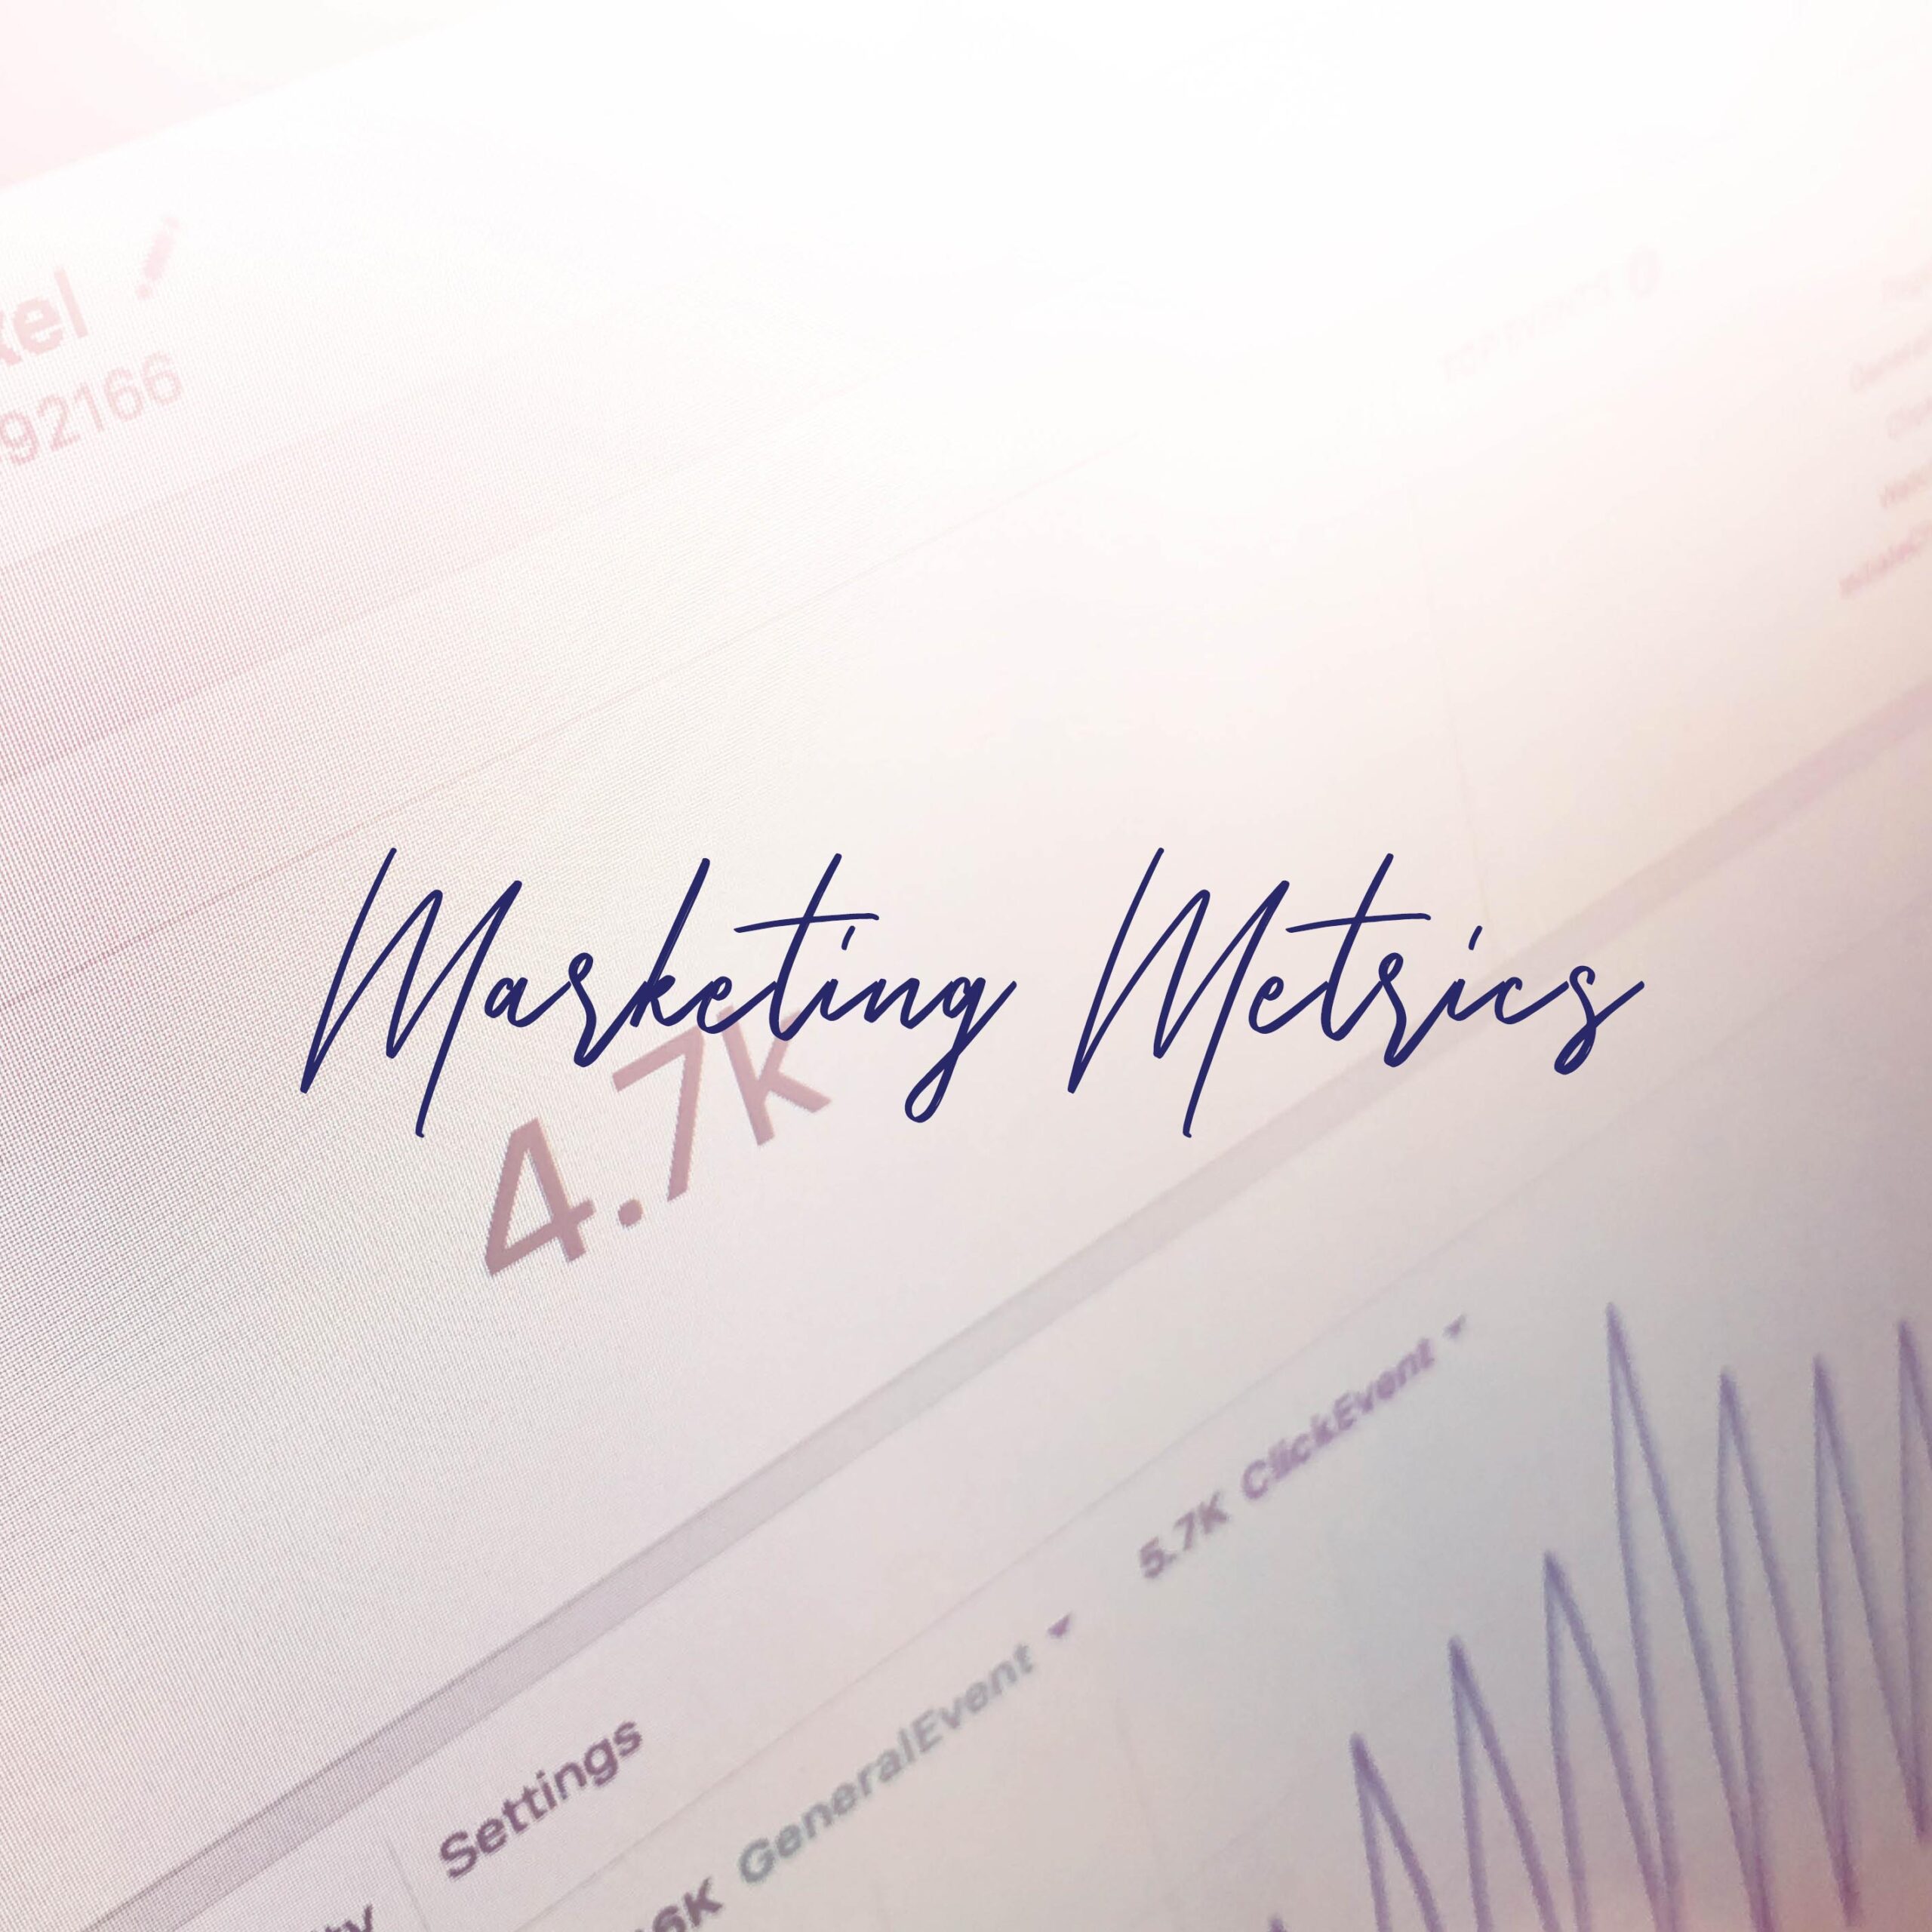 Marketing metrics